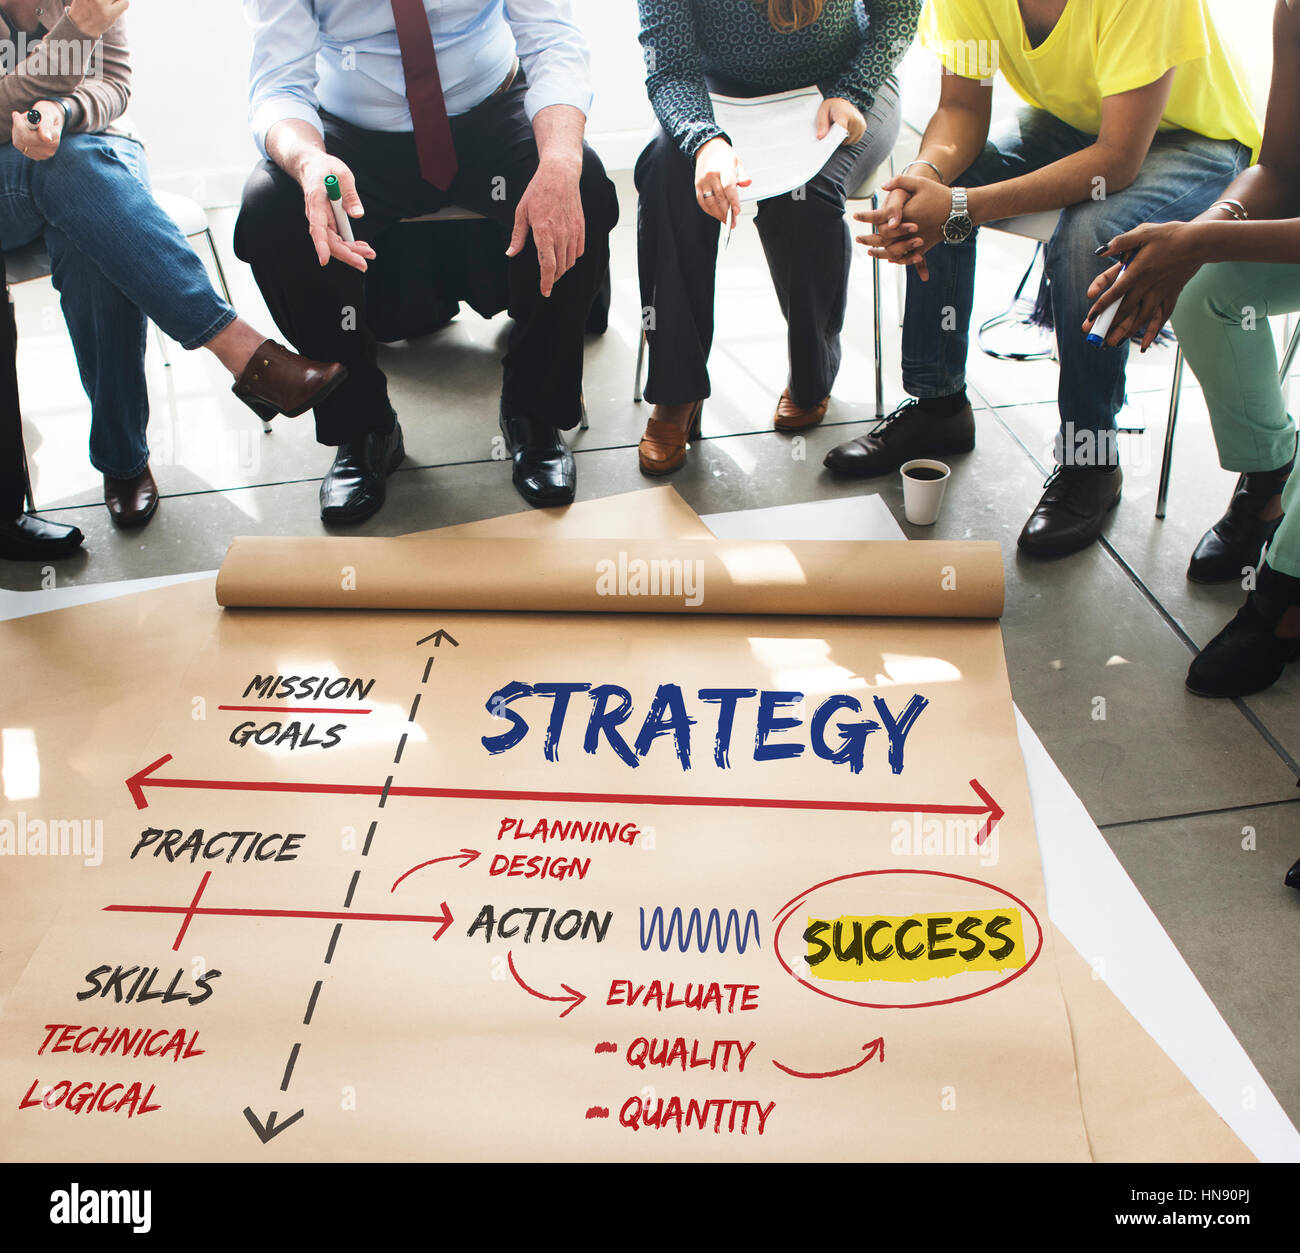 Target Achievement Goals Strategy Concept Stock Photo